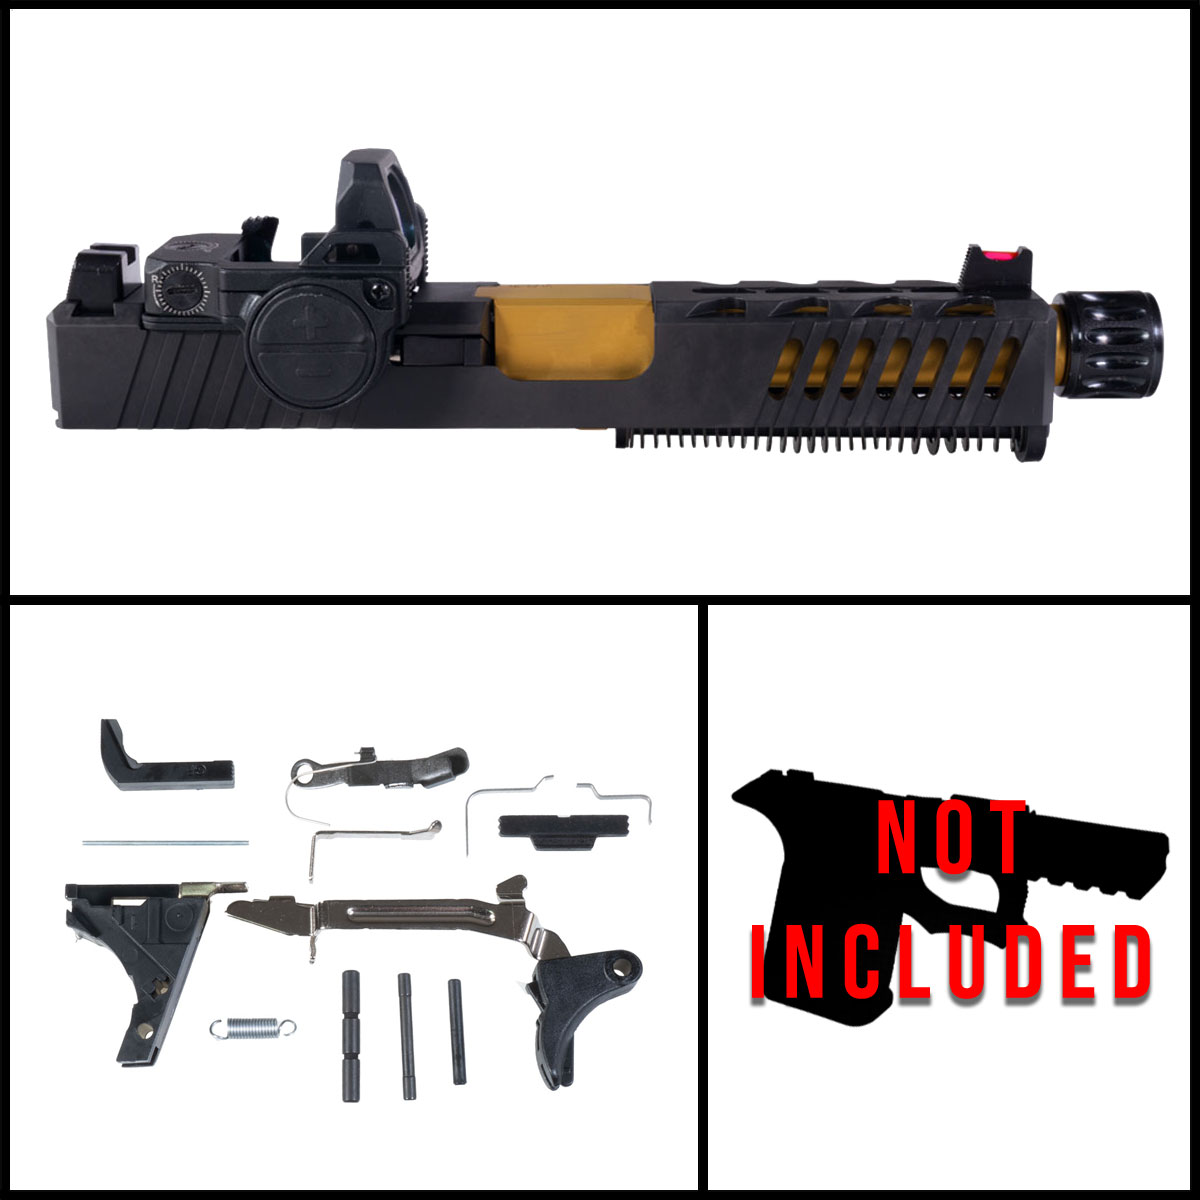 DTT 'Fovea w/ VISM FlipDot Pro' 9mm Full Pistol Build Kit (Everything Minus Frame) - Glock 19 Gen 1-3 Compatible